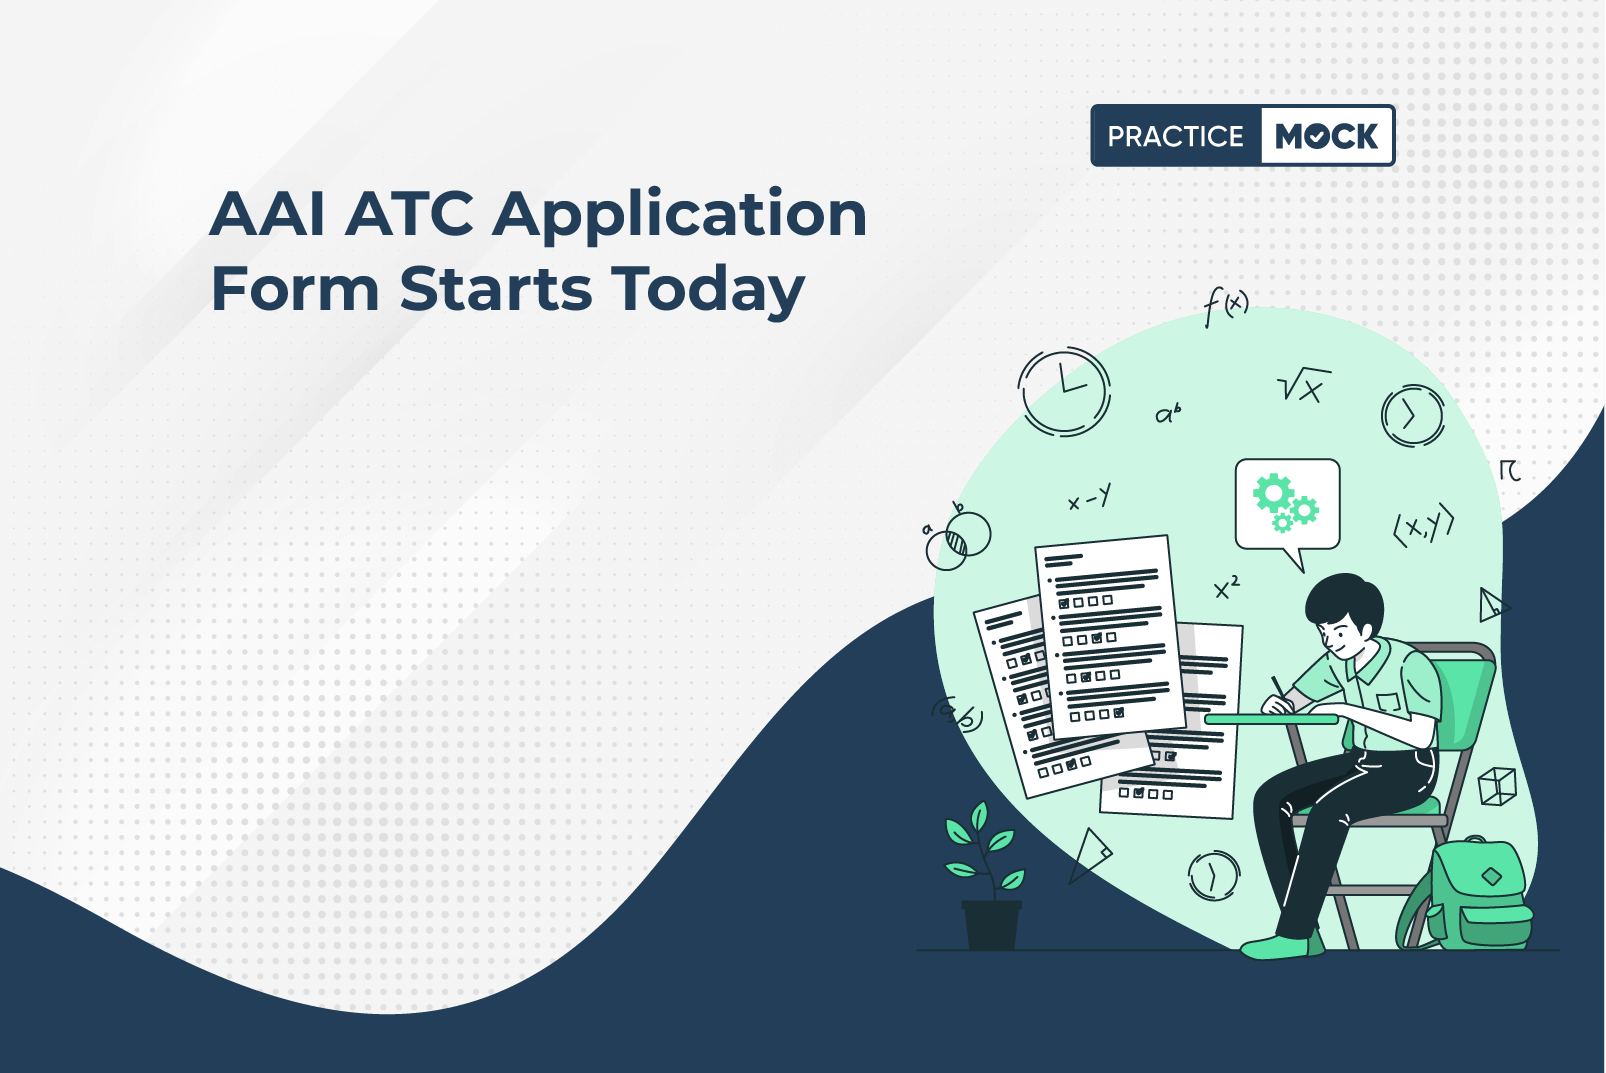 AAI ATC Application Form Starts Today